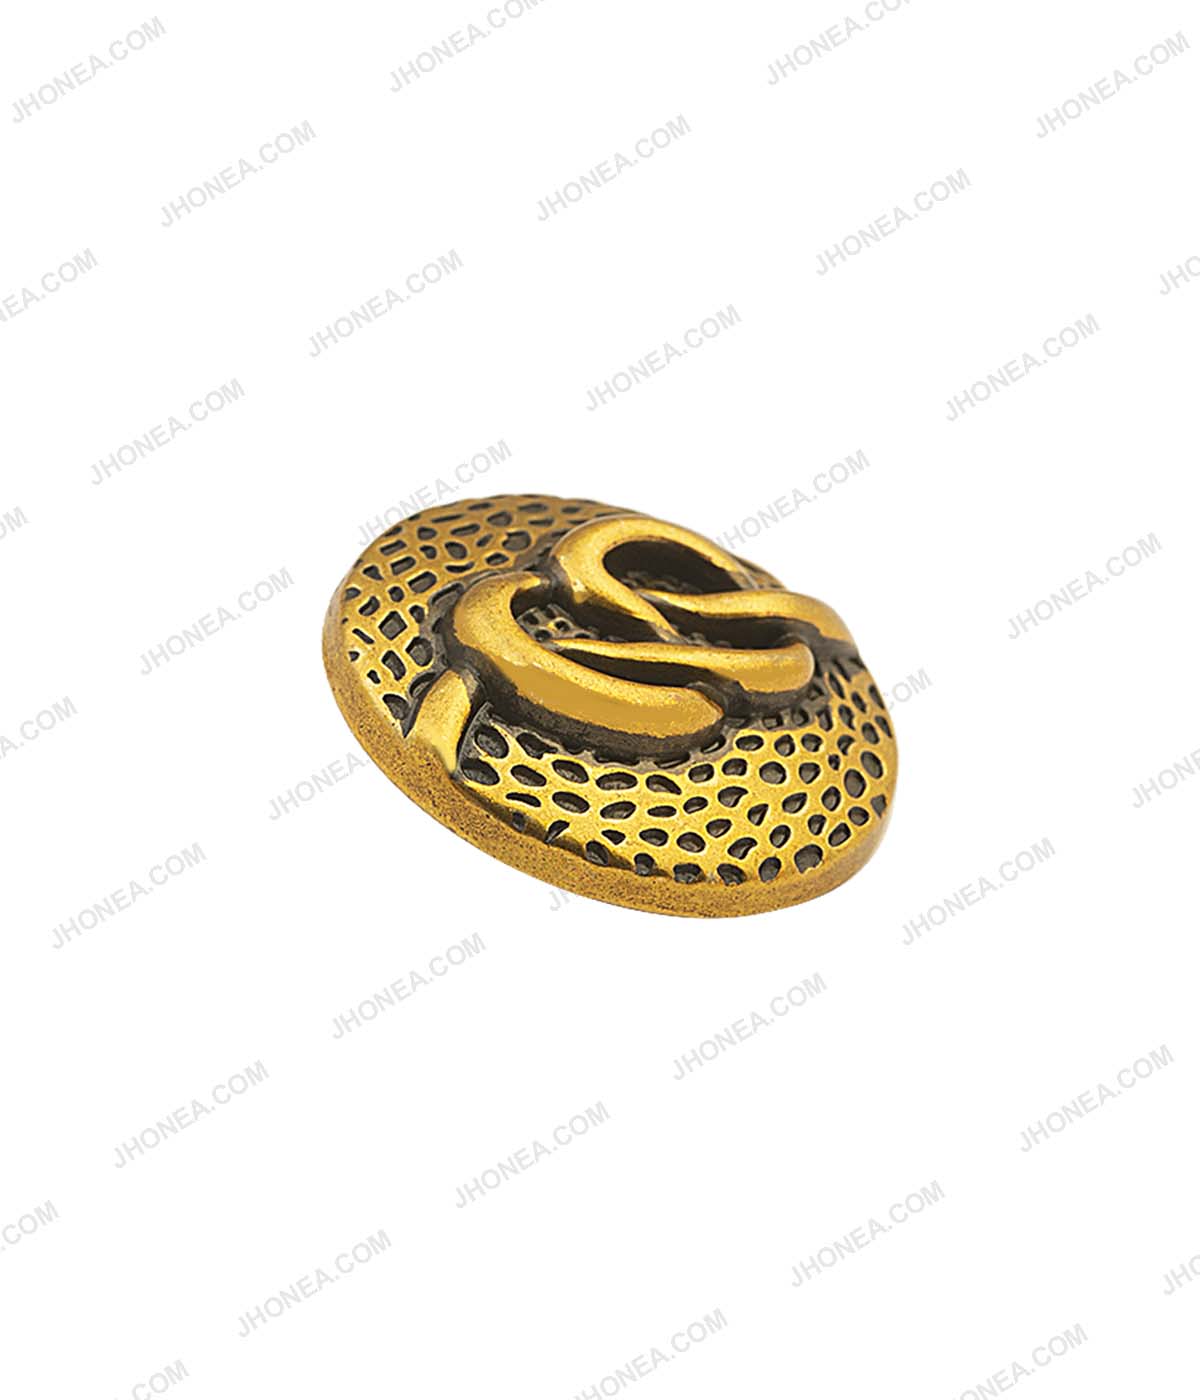 Figure Eight Knot Antique Gold Surface Design Metal Buttons